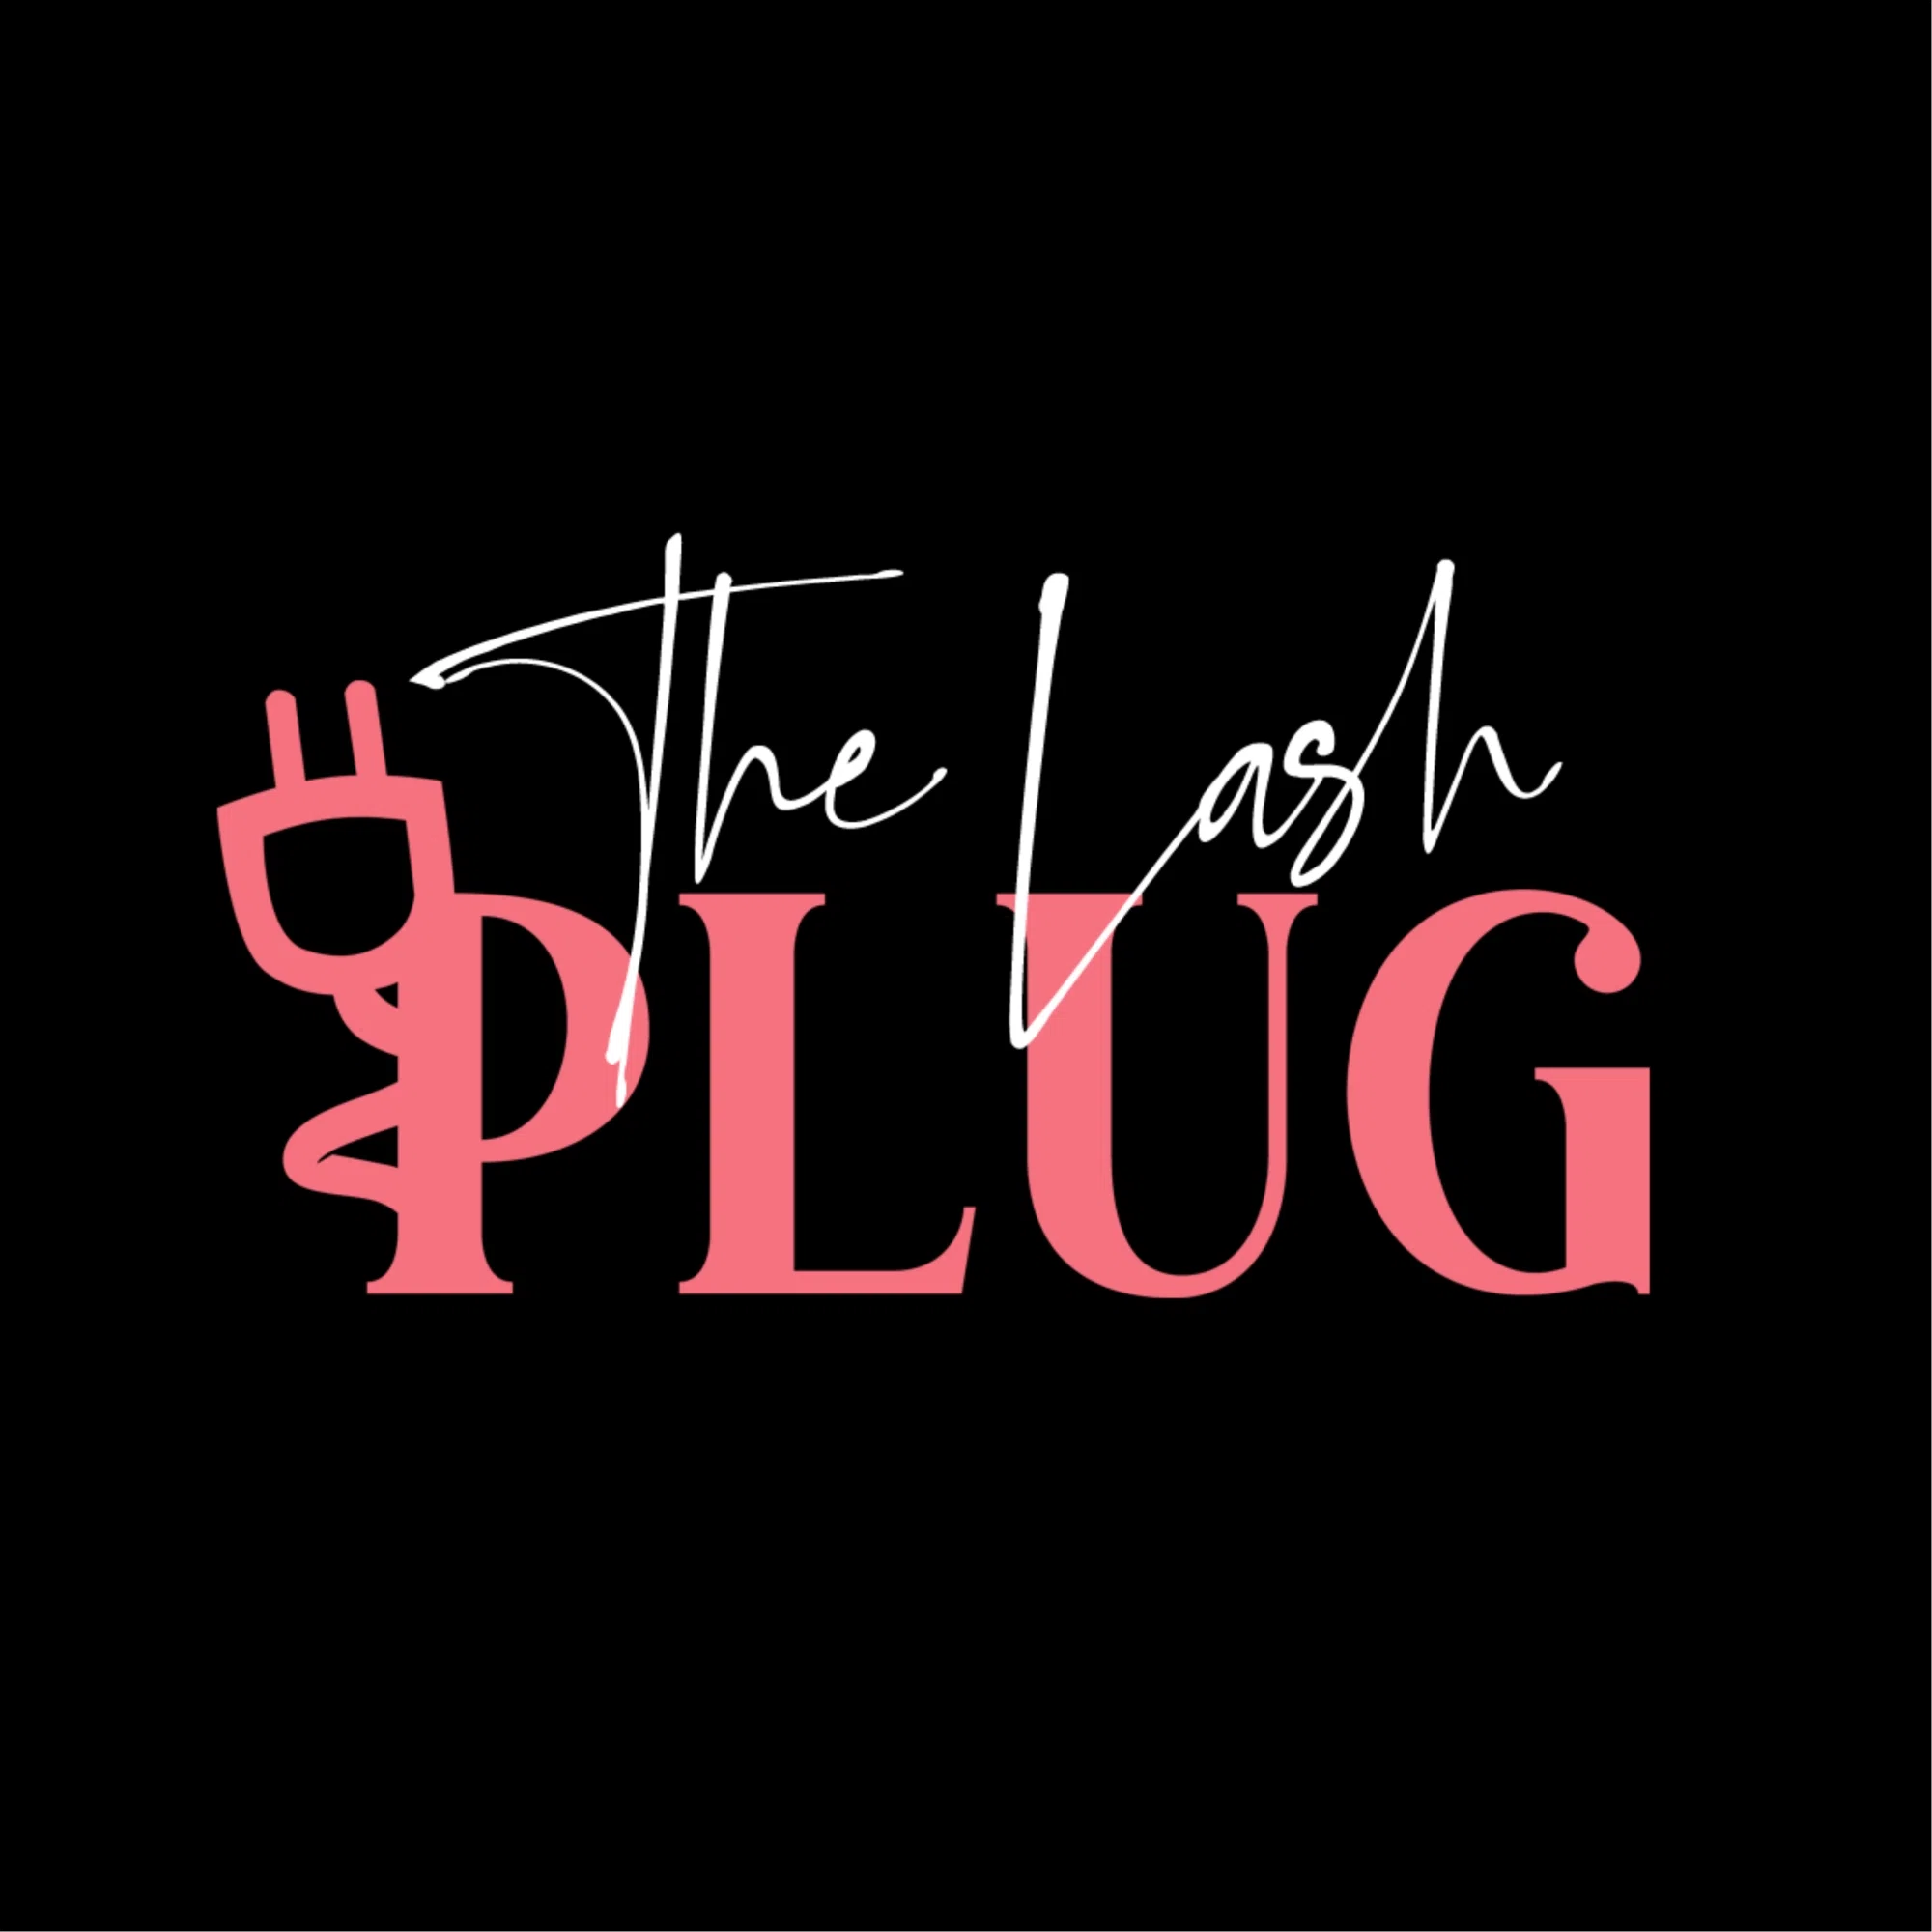 Buy 4 on Lashes Get 1 Free at Theelashhplug.com                          . @ The Lash Plug